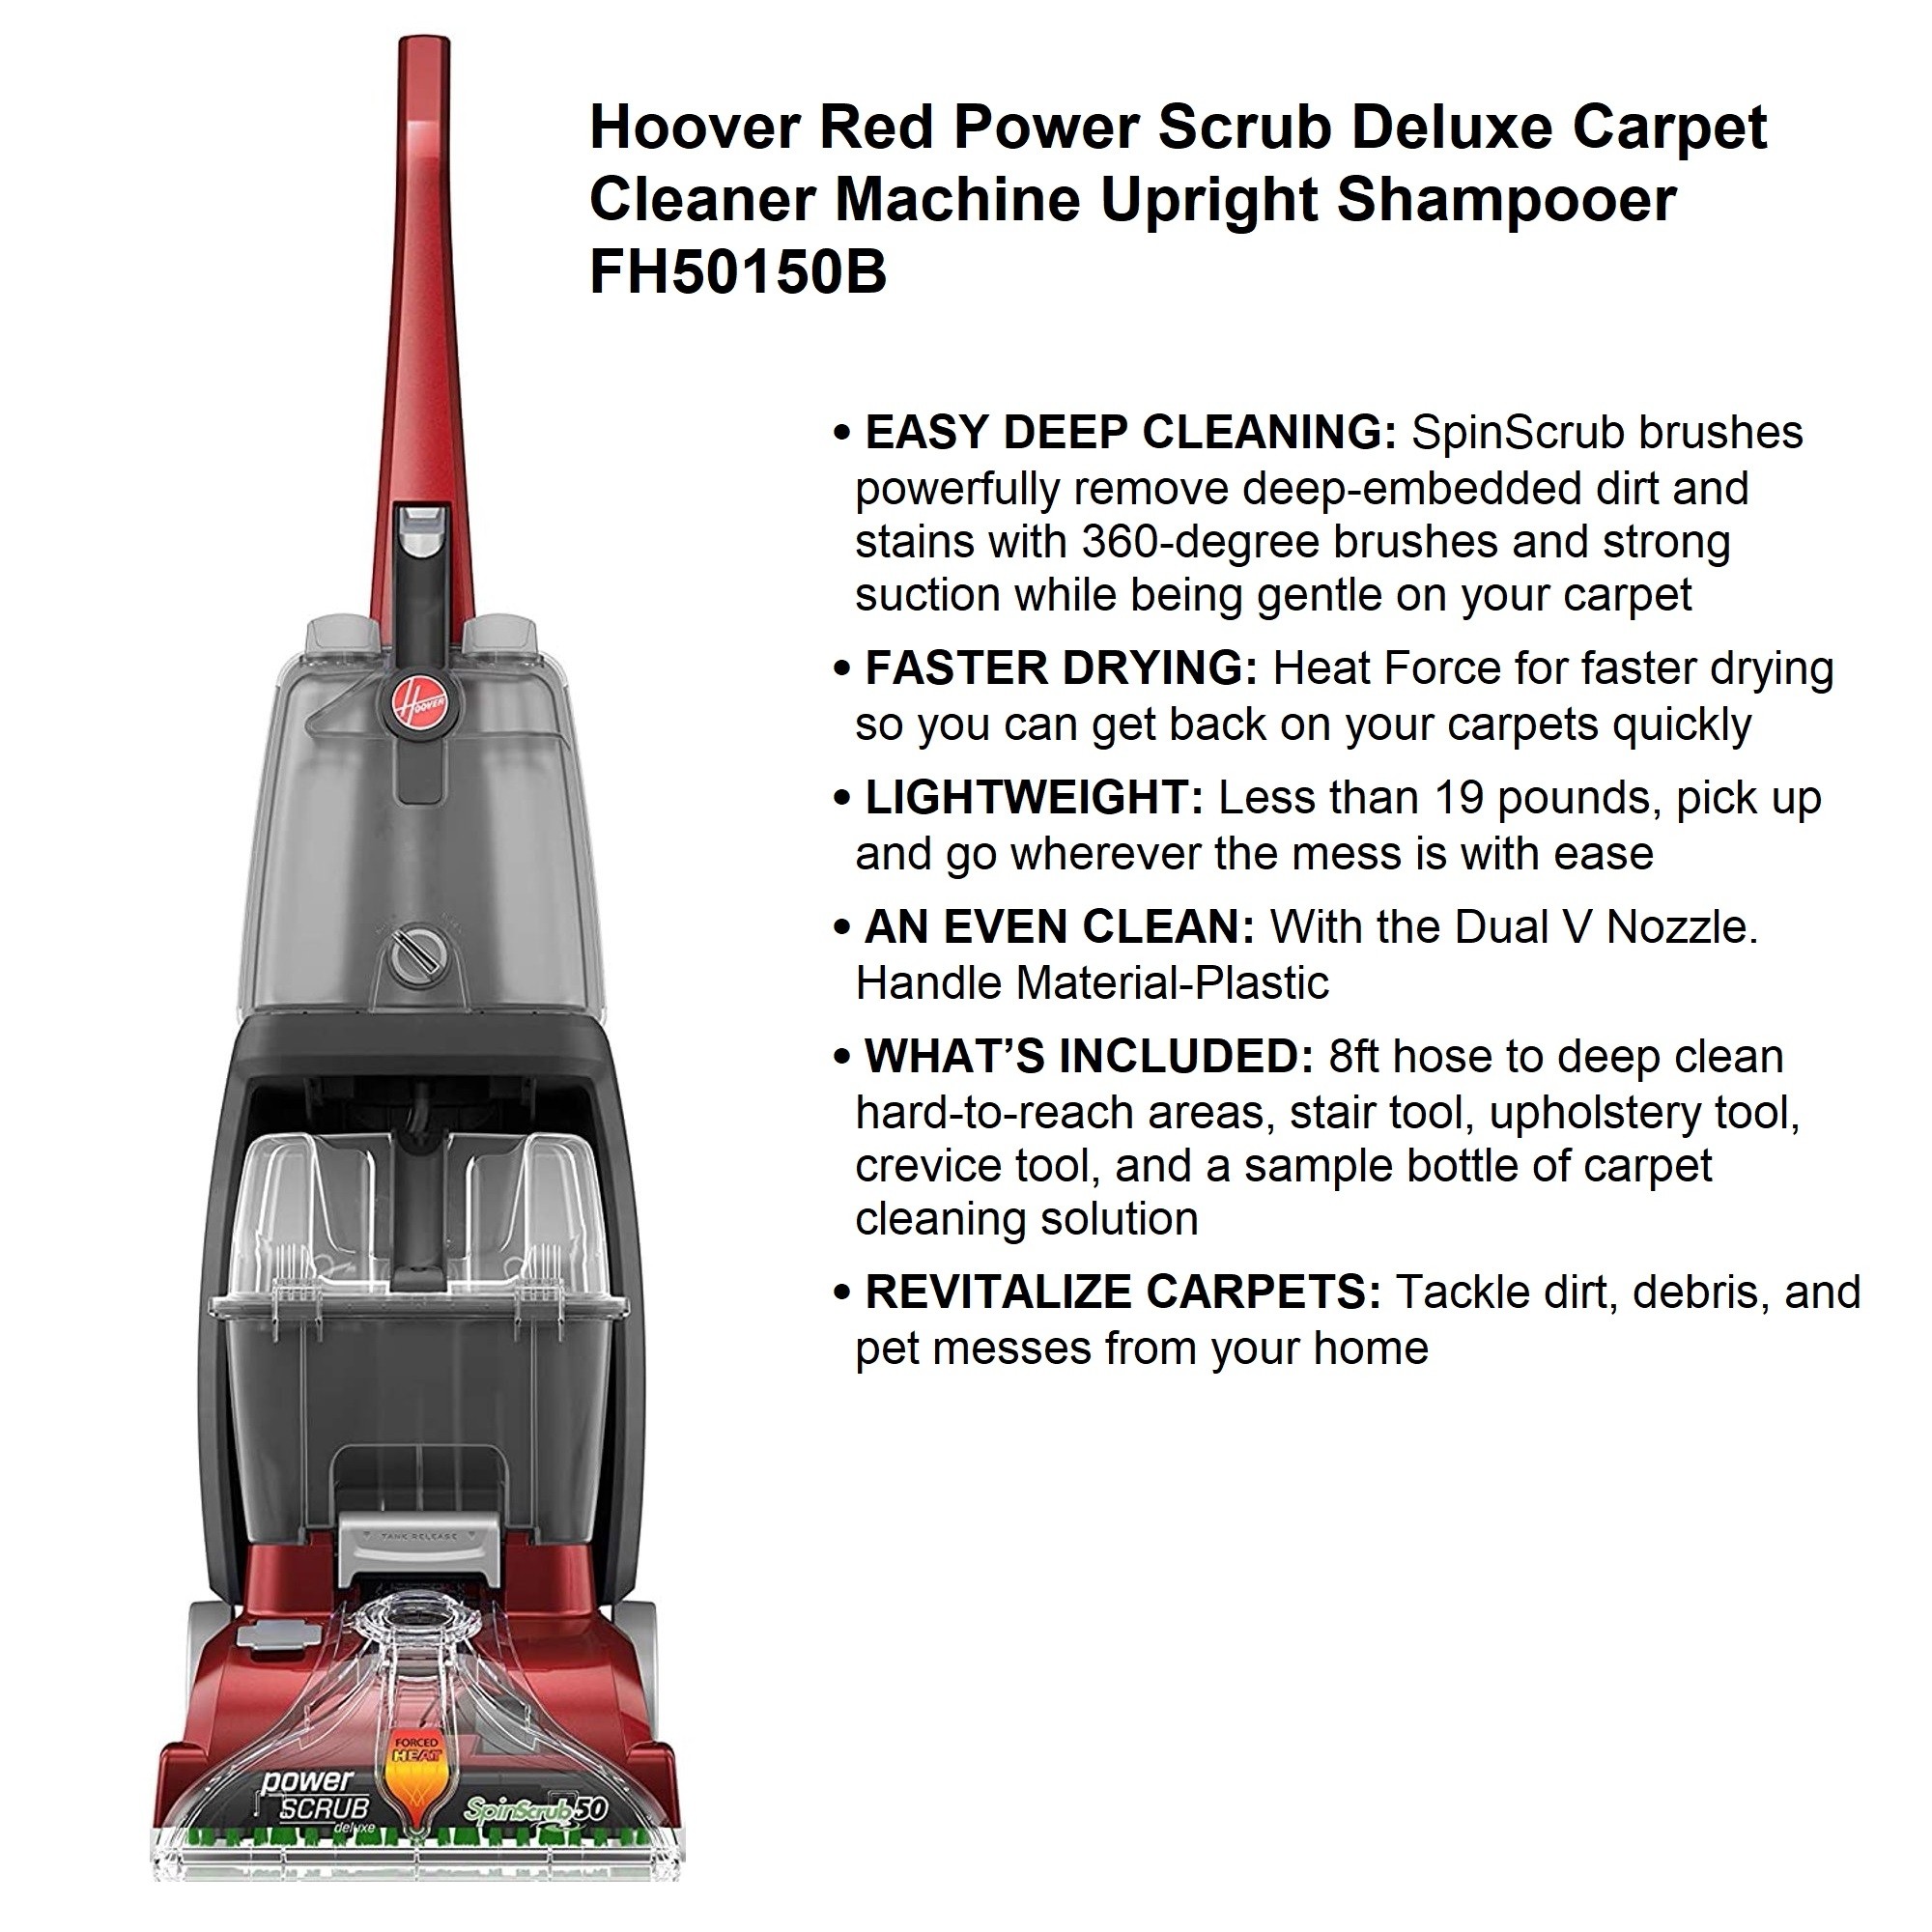 Hoover Power Scrub Deluxe Carpet Cleaner Machine Upright Shampooer